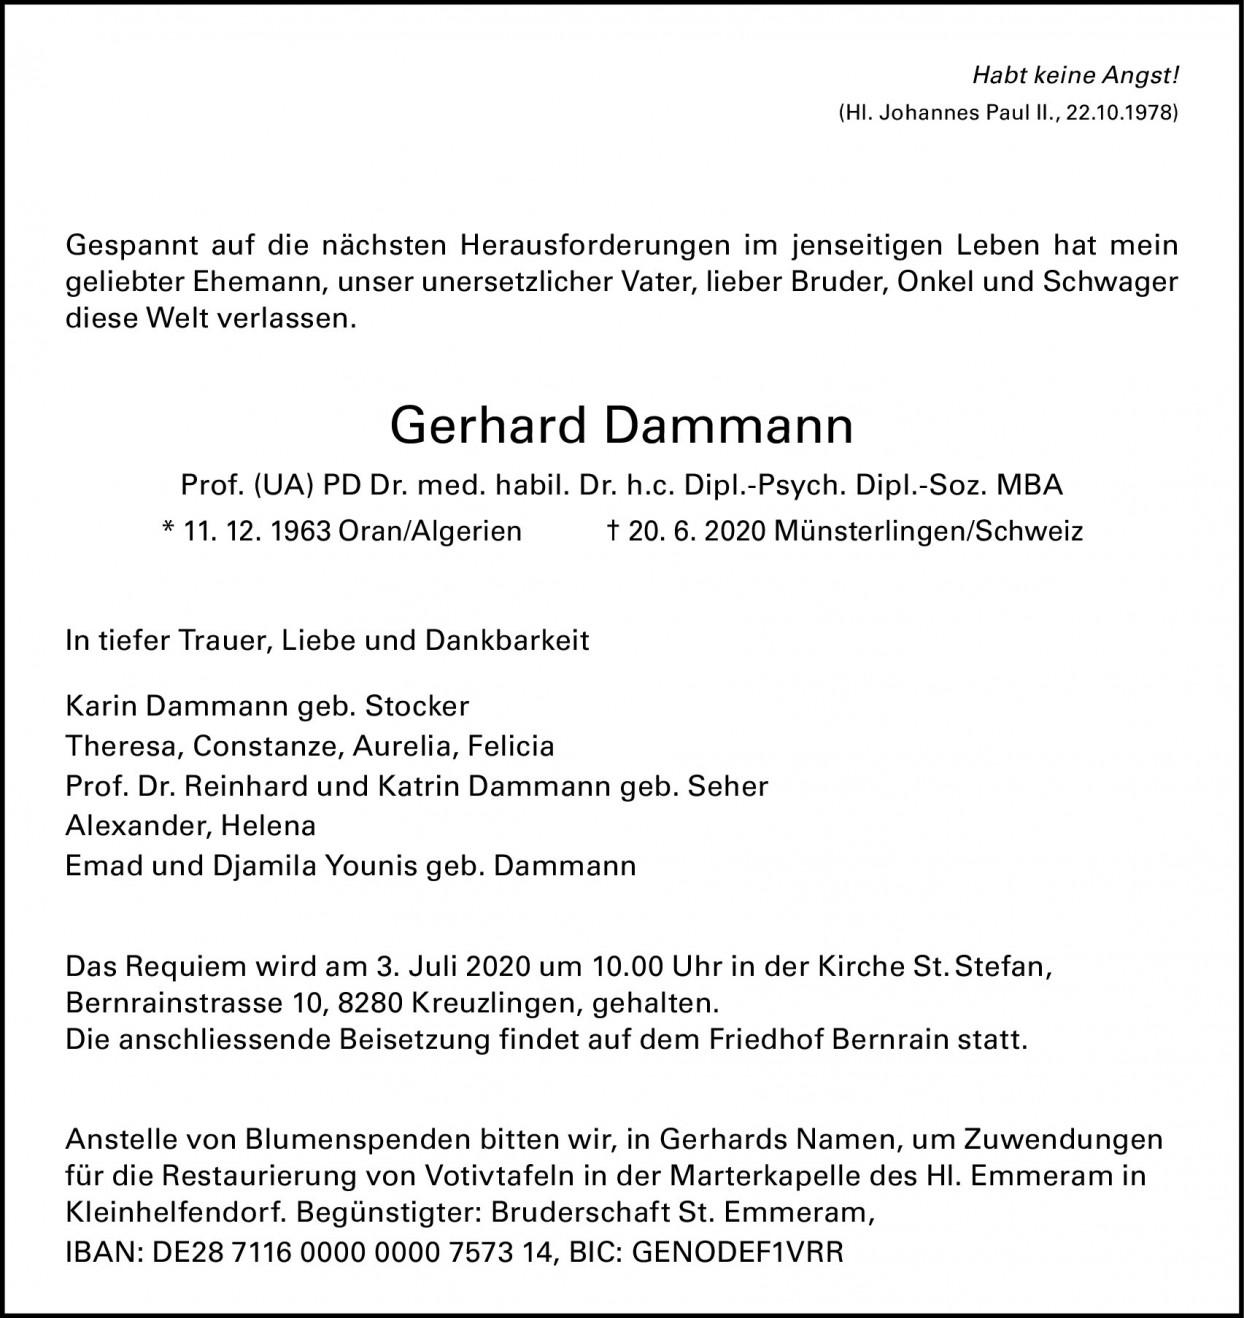 Gerhard Dammann